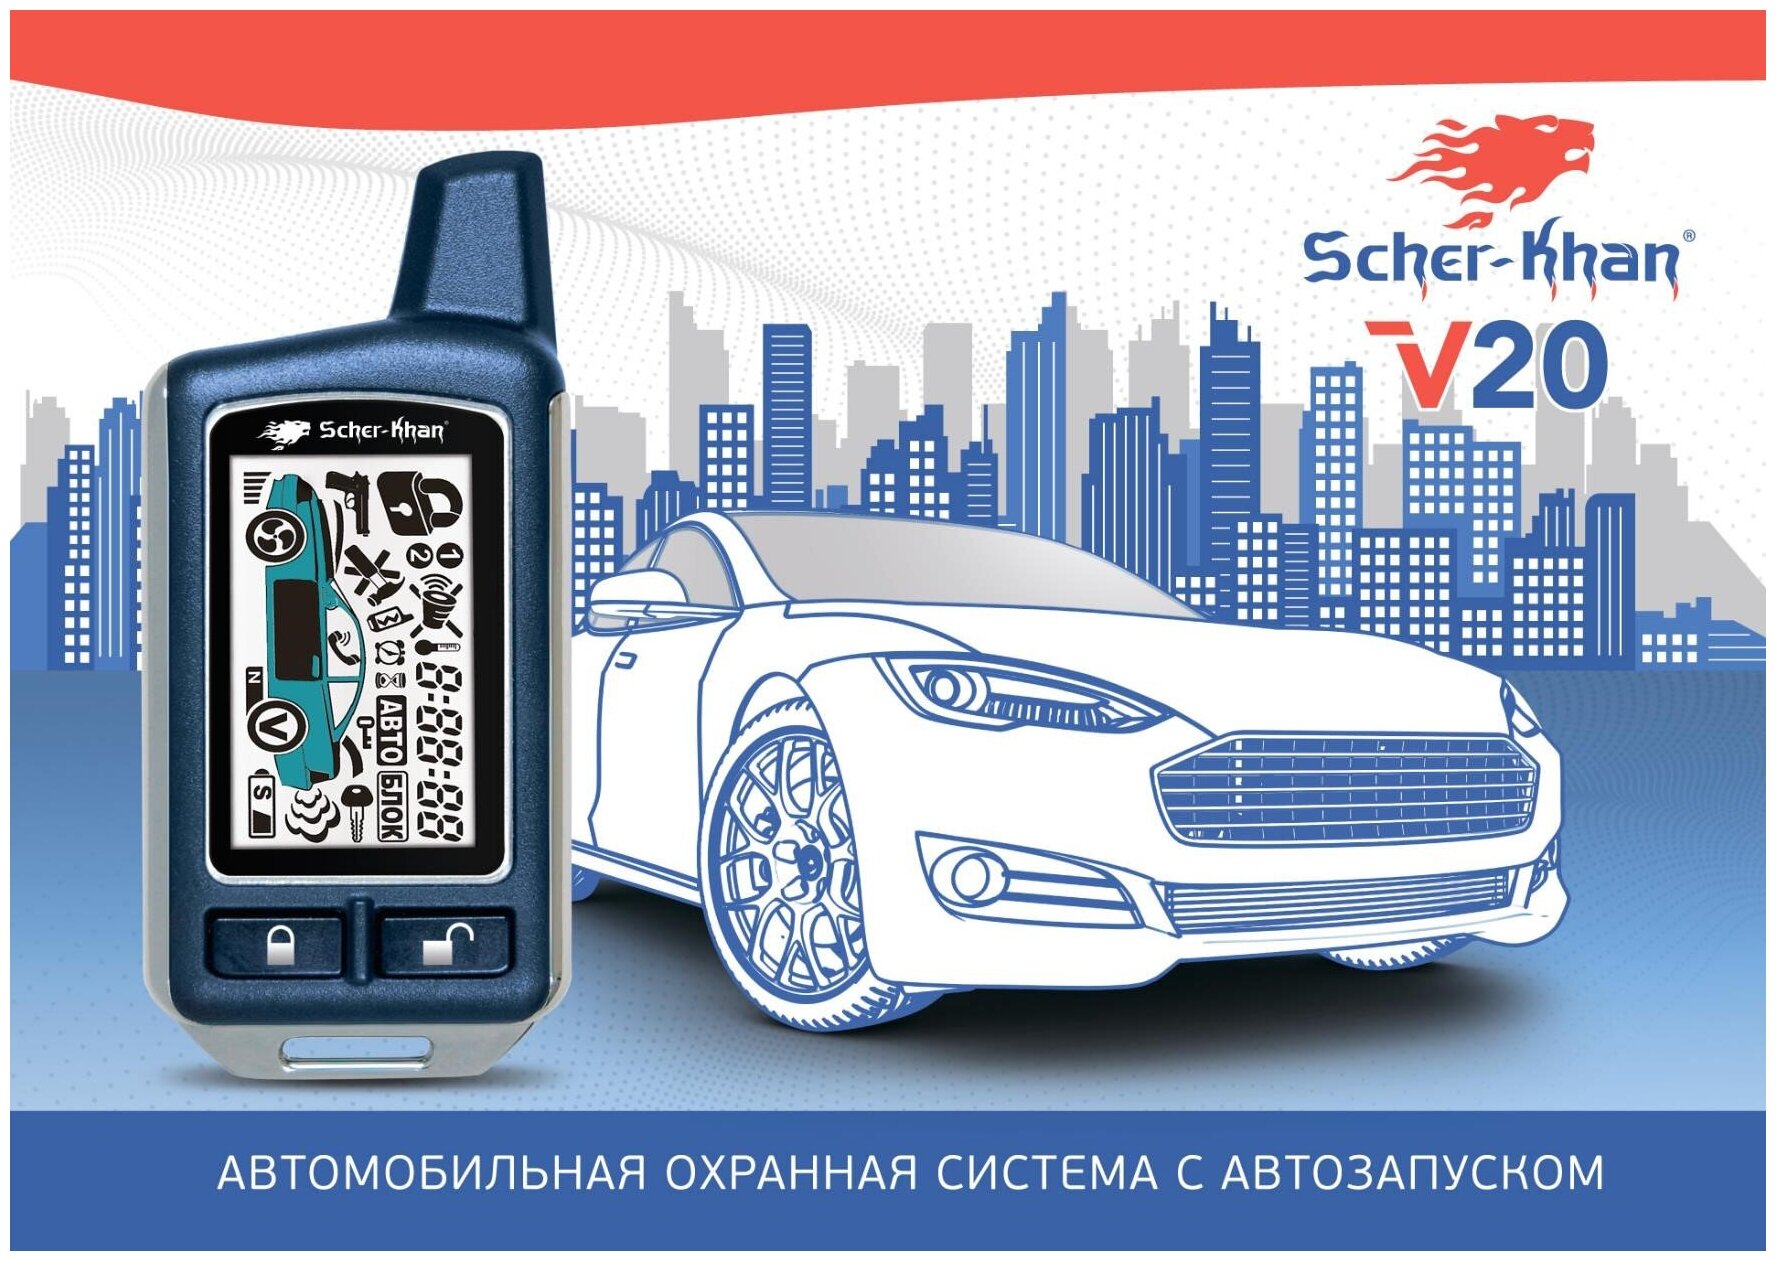 SCHER-KHAN SCKH-V20 Сигнализация SCHER-KHAN SCKH-V20, Автомобильная охранная система с двусторонней связью SCHER-KHAN SCKH-V20